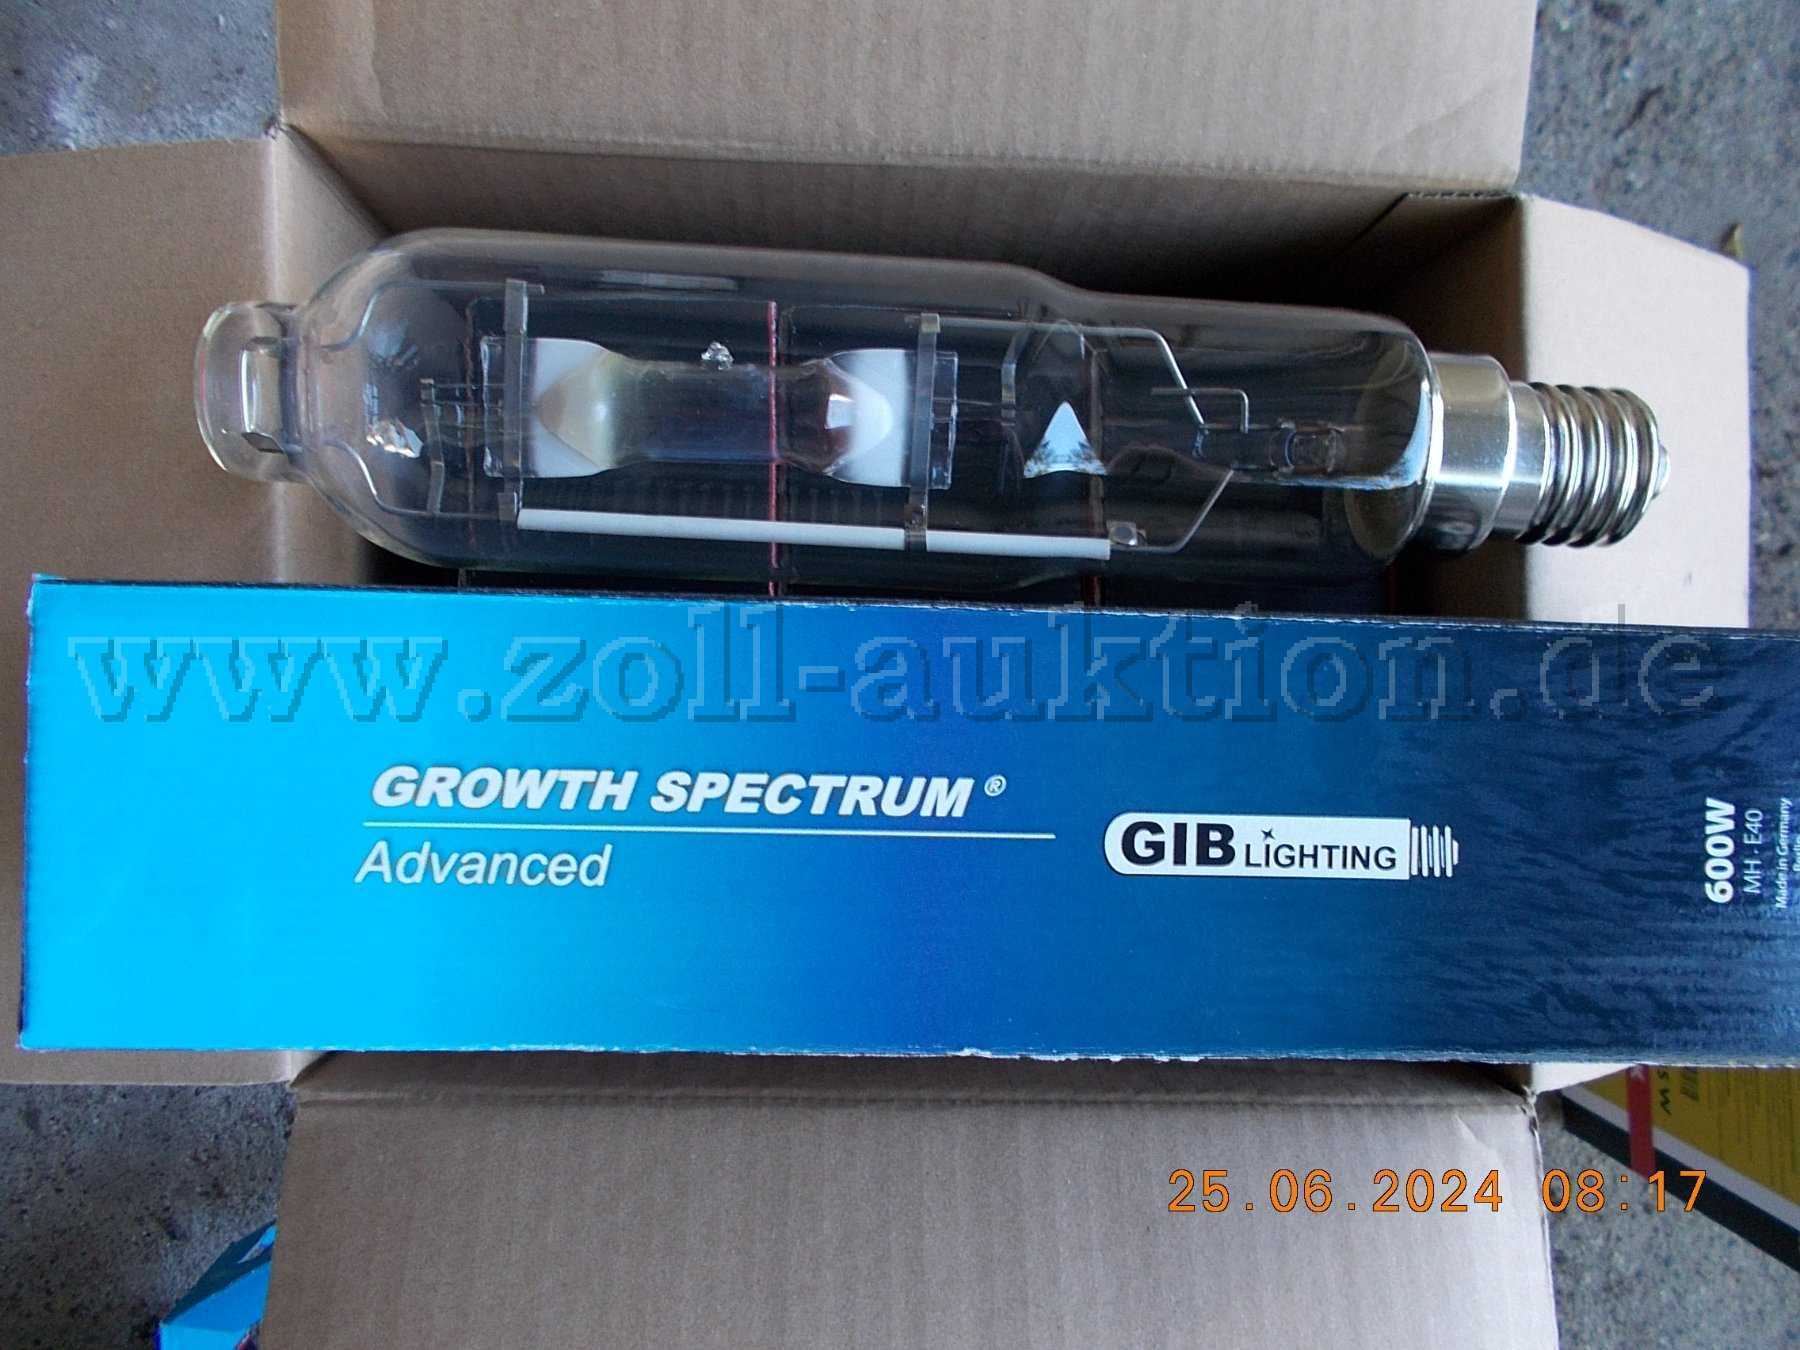 6x GIB-Lightning Growth Spectrum Advanced